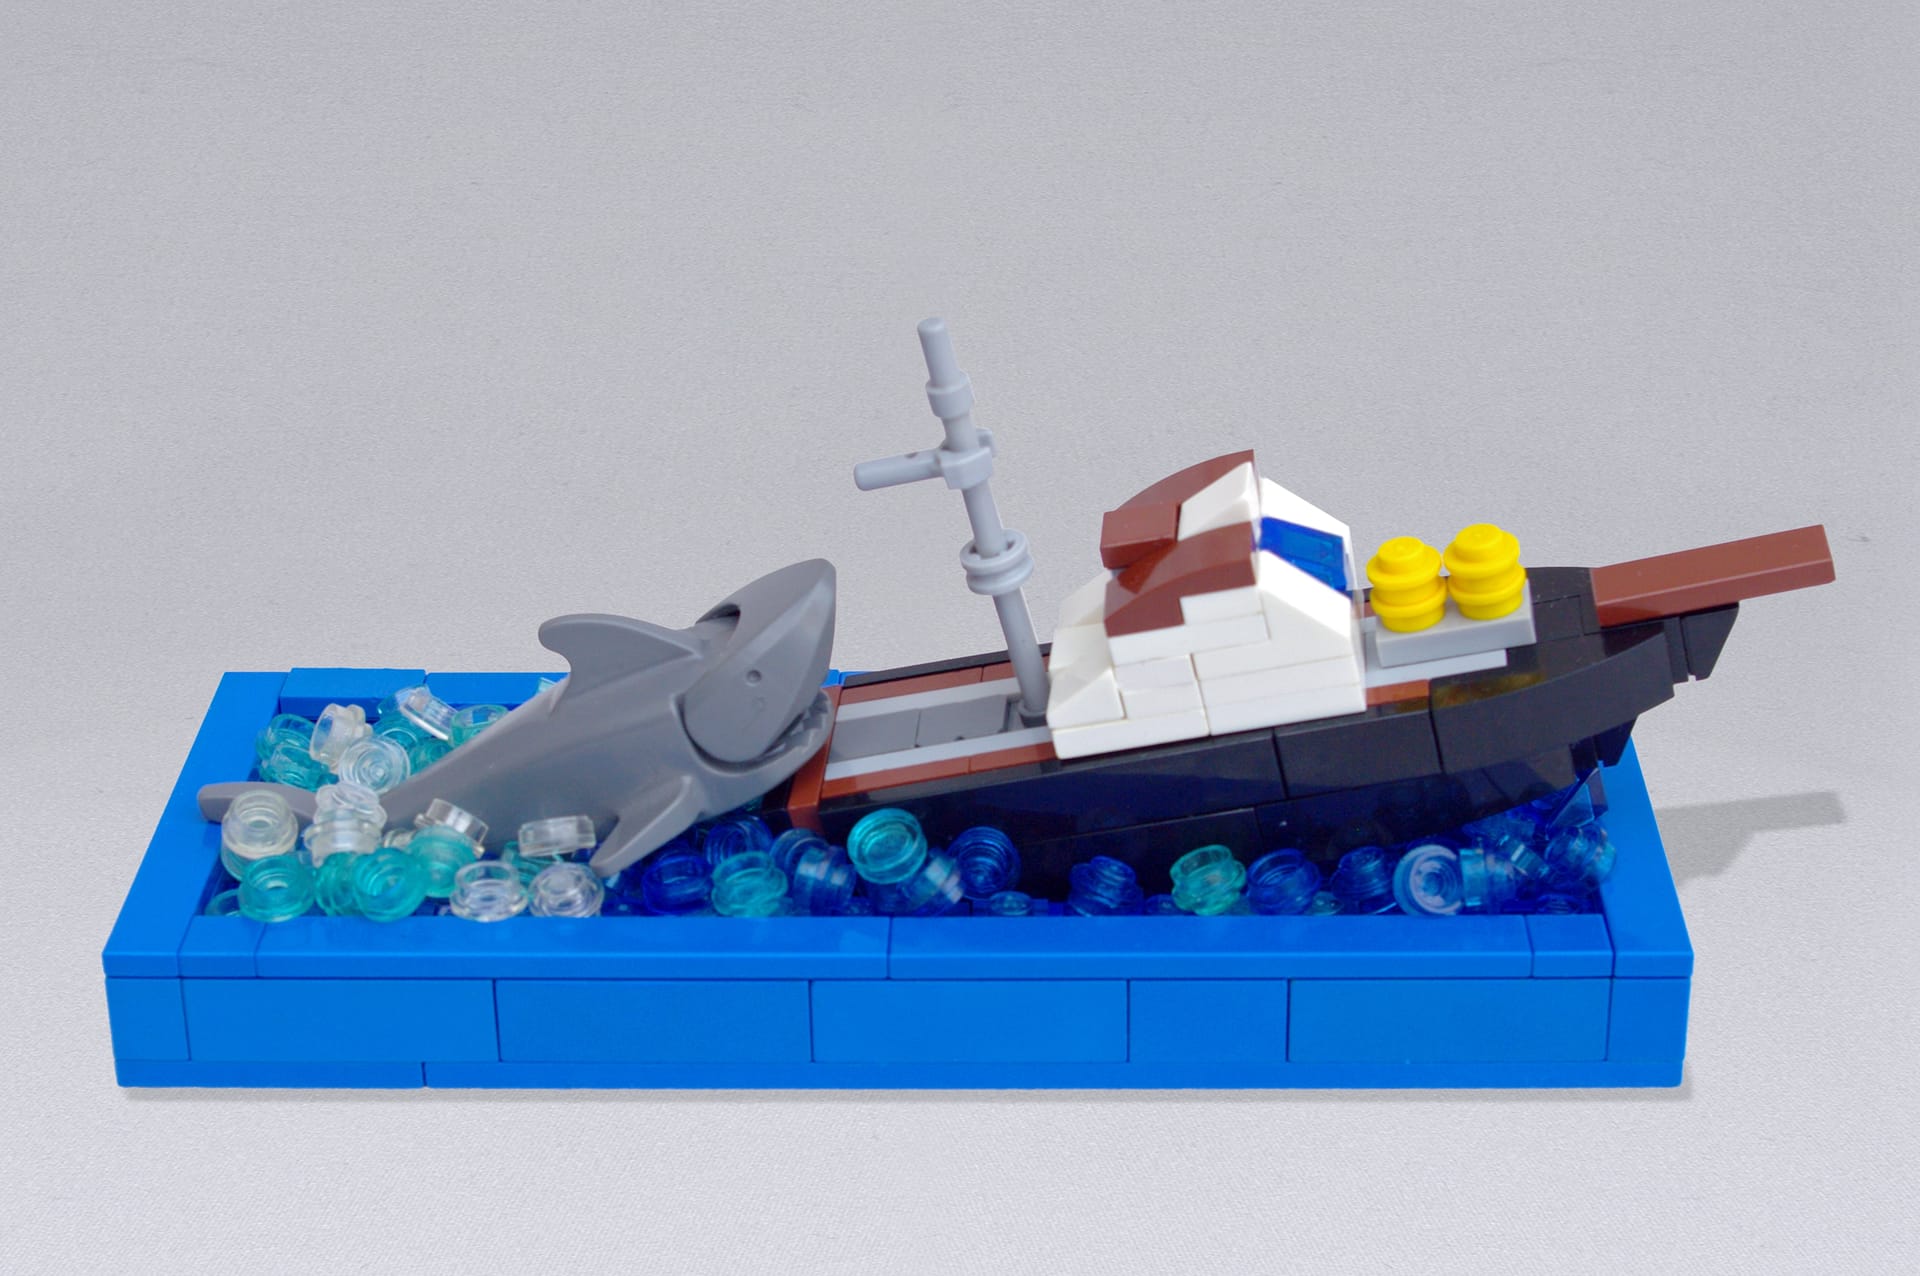 Concurs Microscale Movie Scenes – Creatia 8: You’re gonna need a bigger boat!